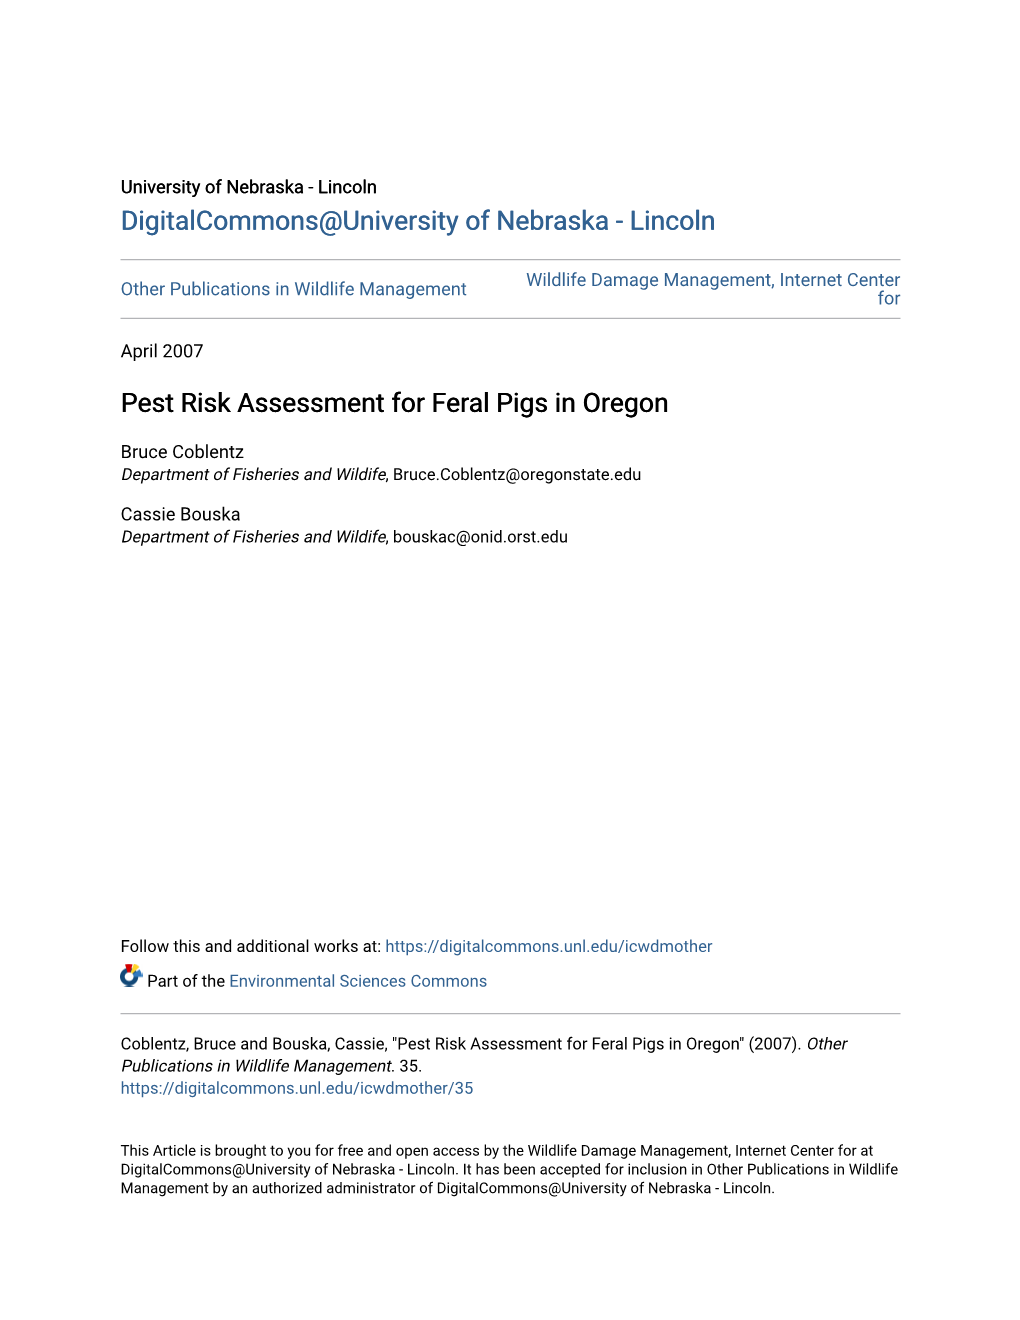 Pest Risk Assessment for Feral Pigs in Oregon